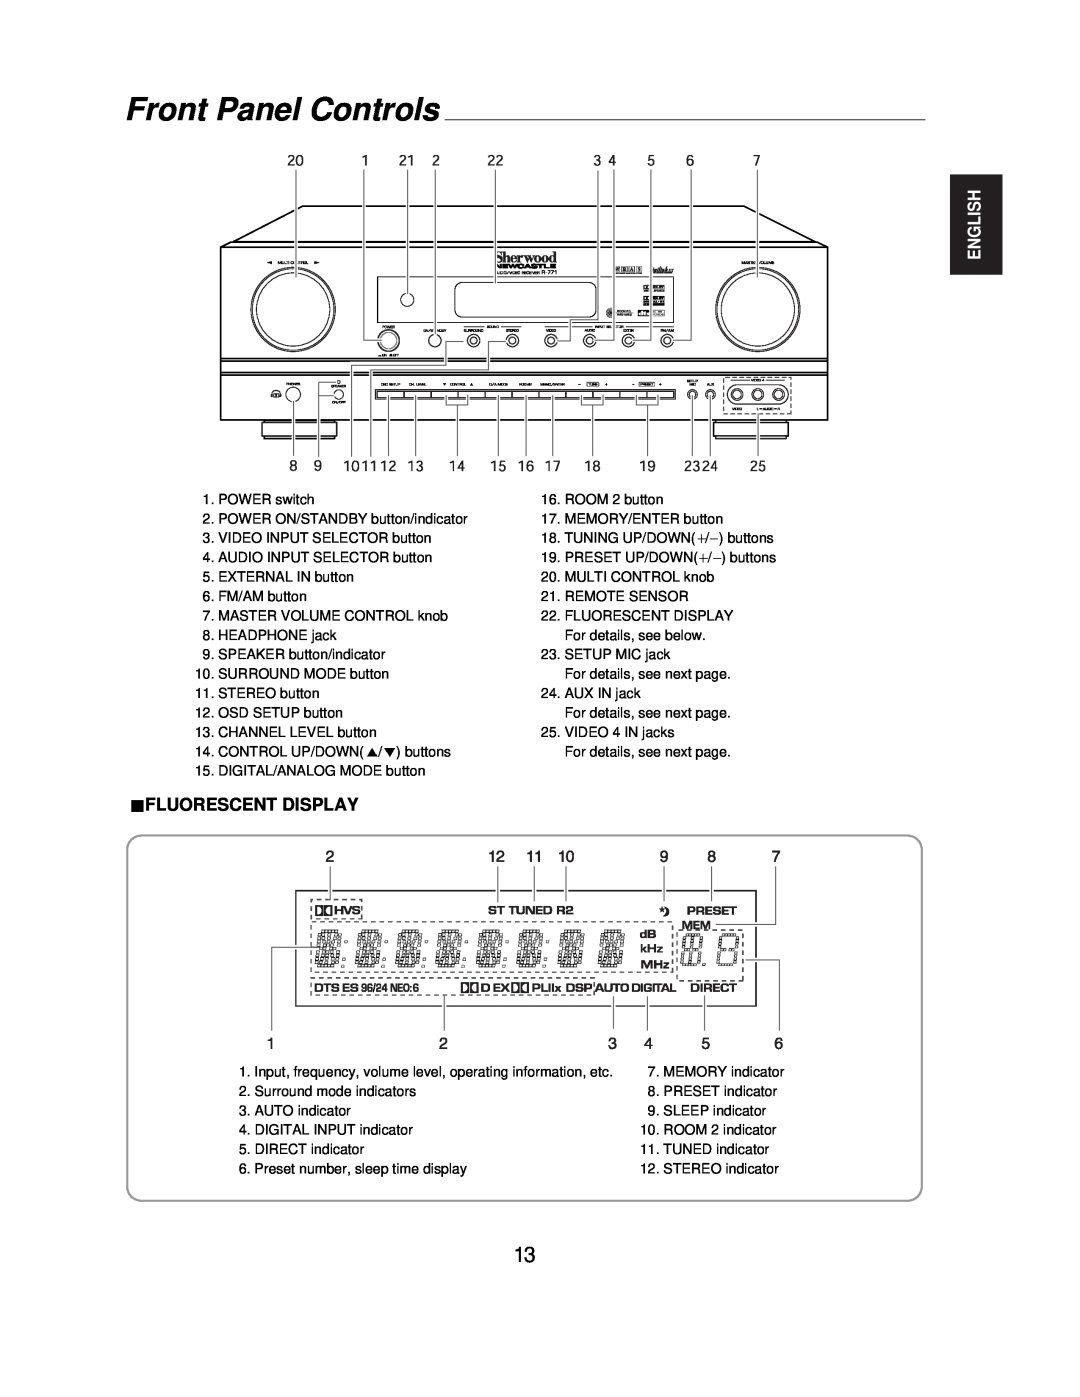 Sherwood R-771 manual Front Panel Controls, Fluorescent Display, English 